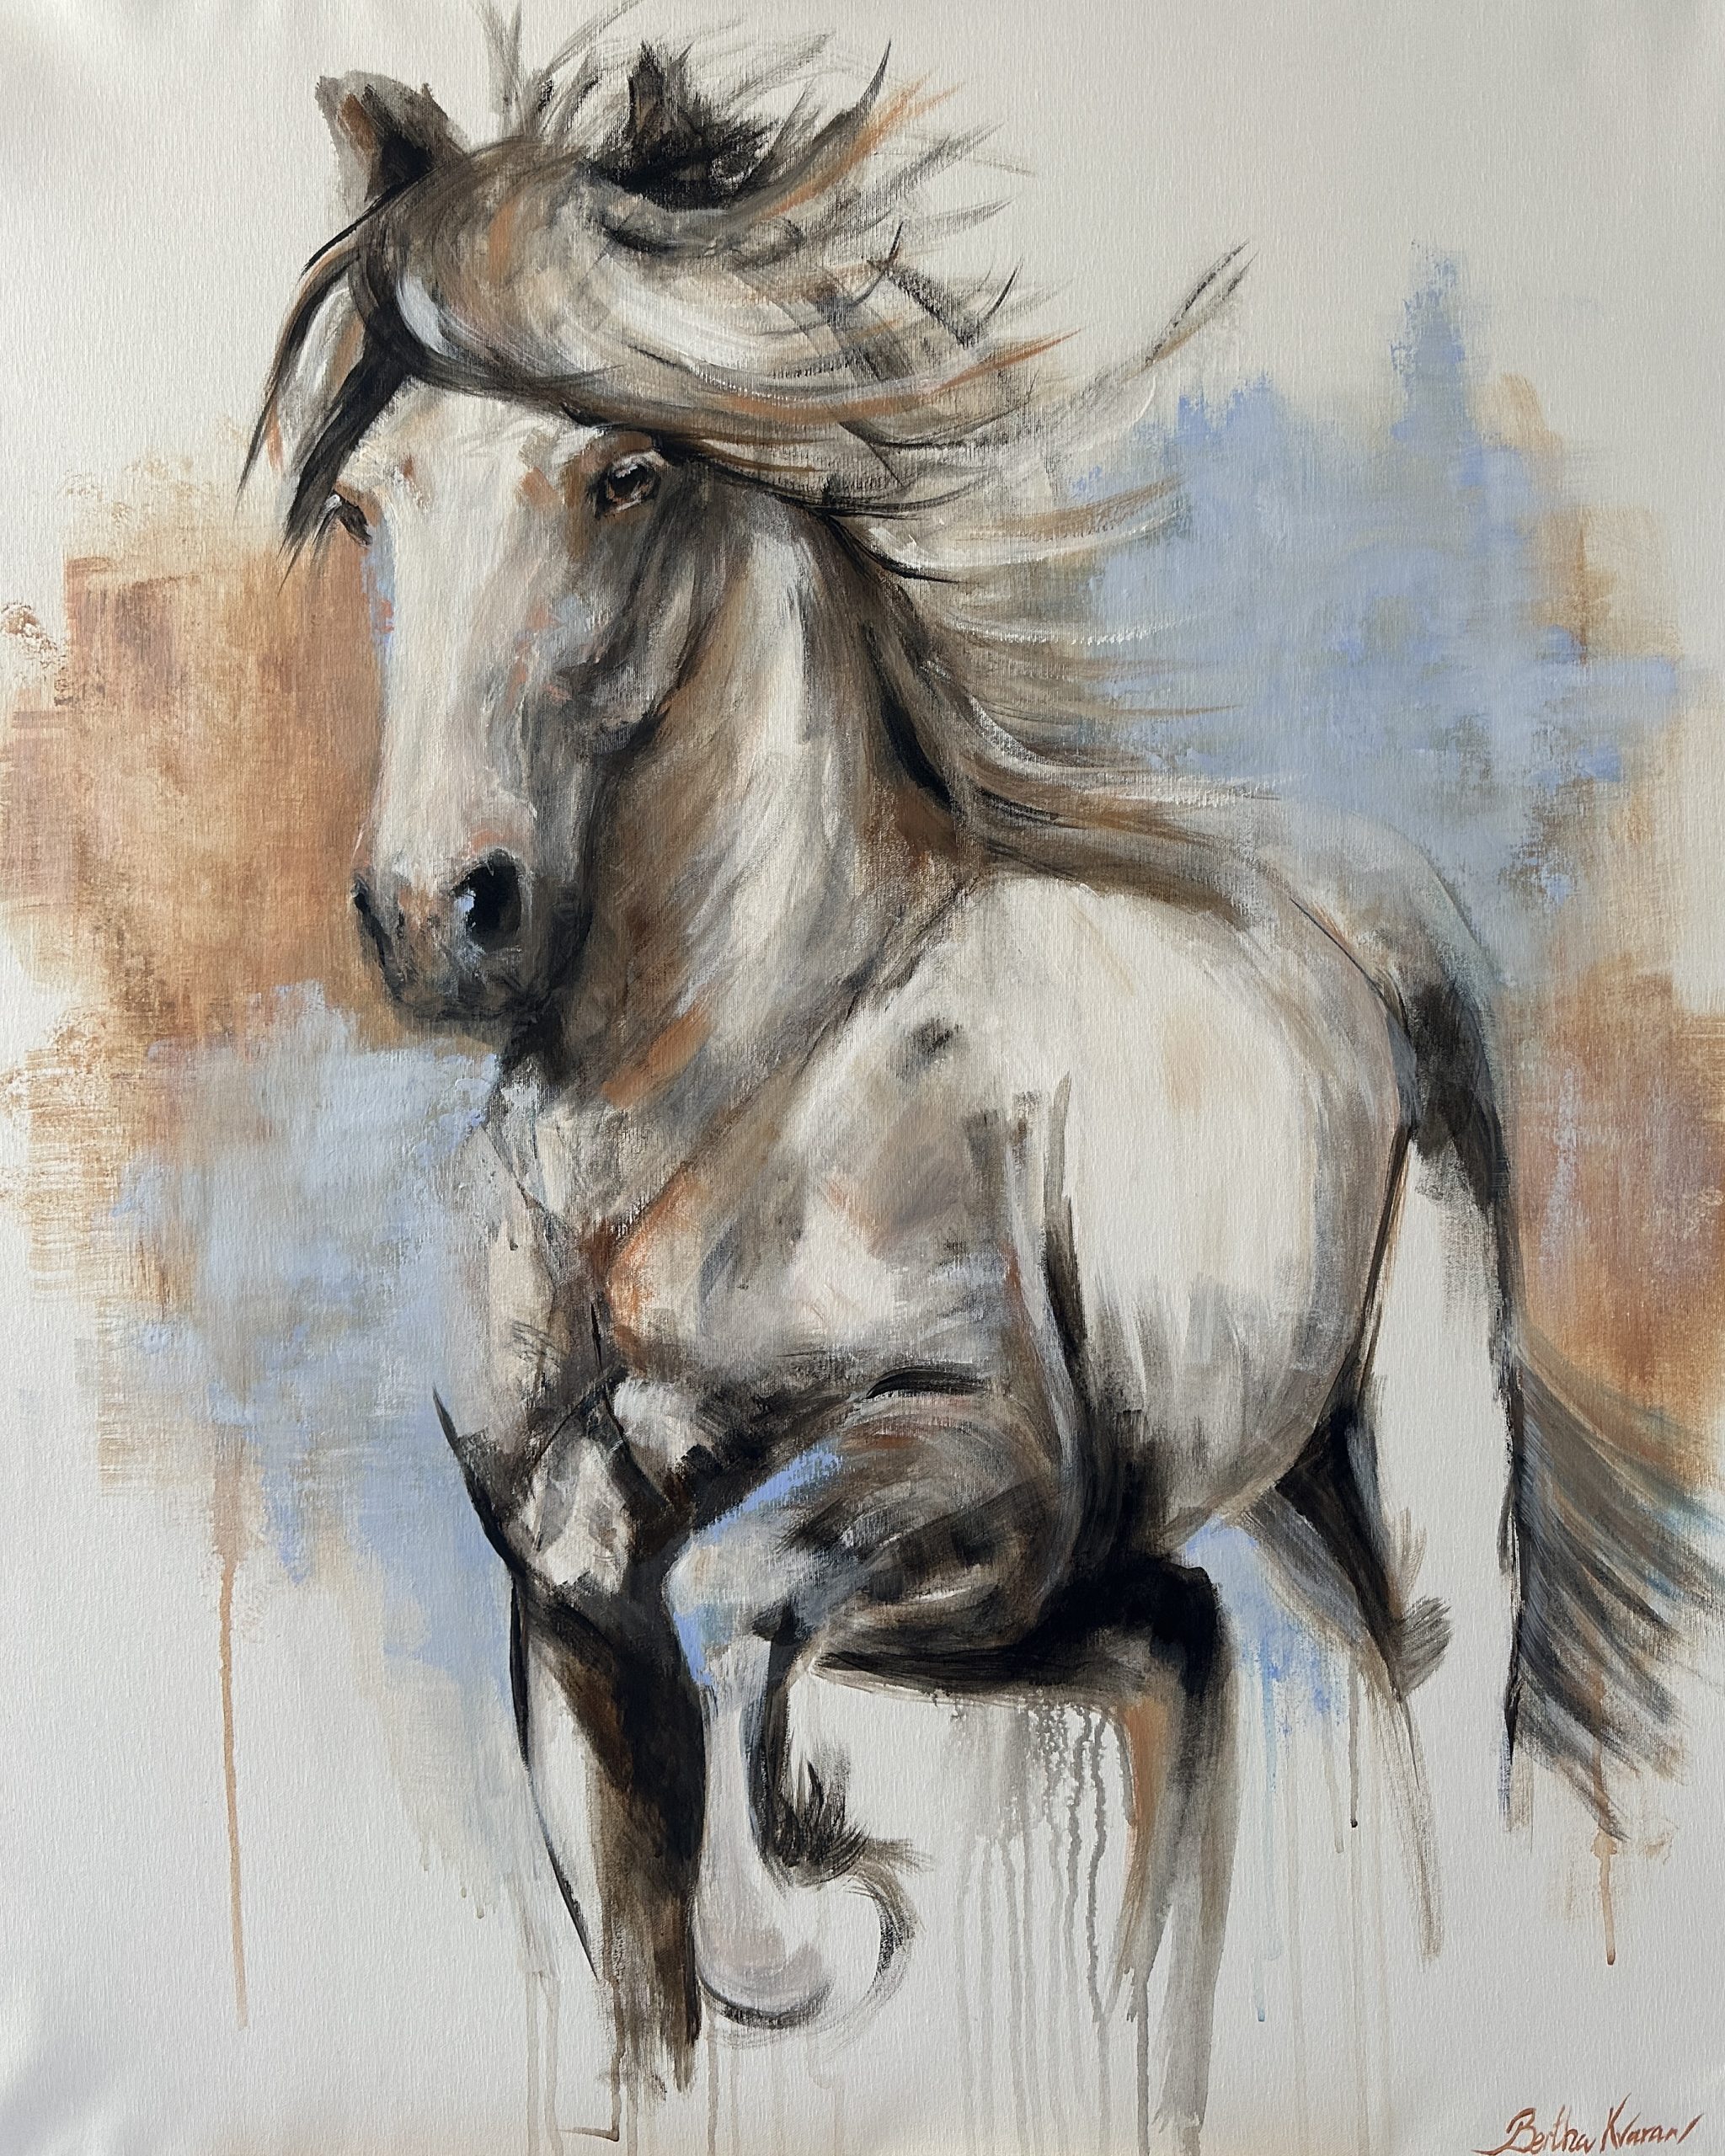 White horse on canvas, painting by Bertha Kvaran ART